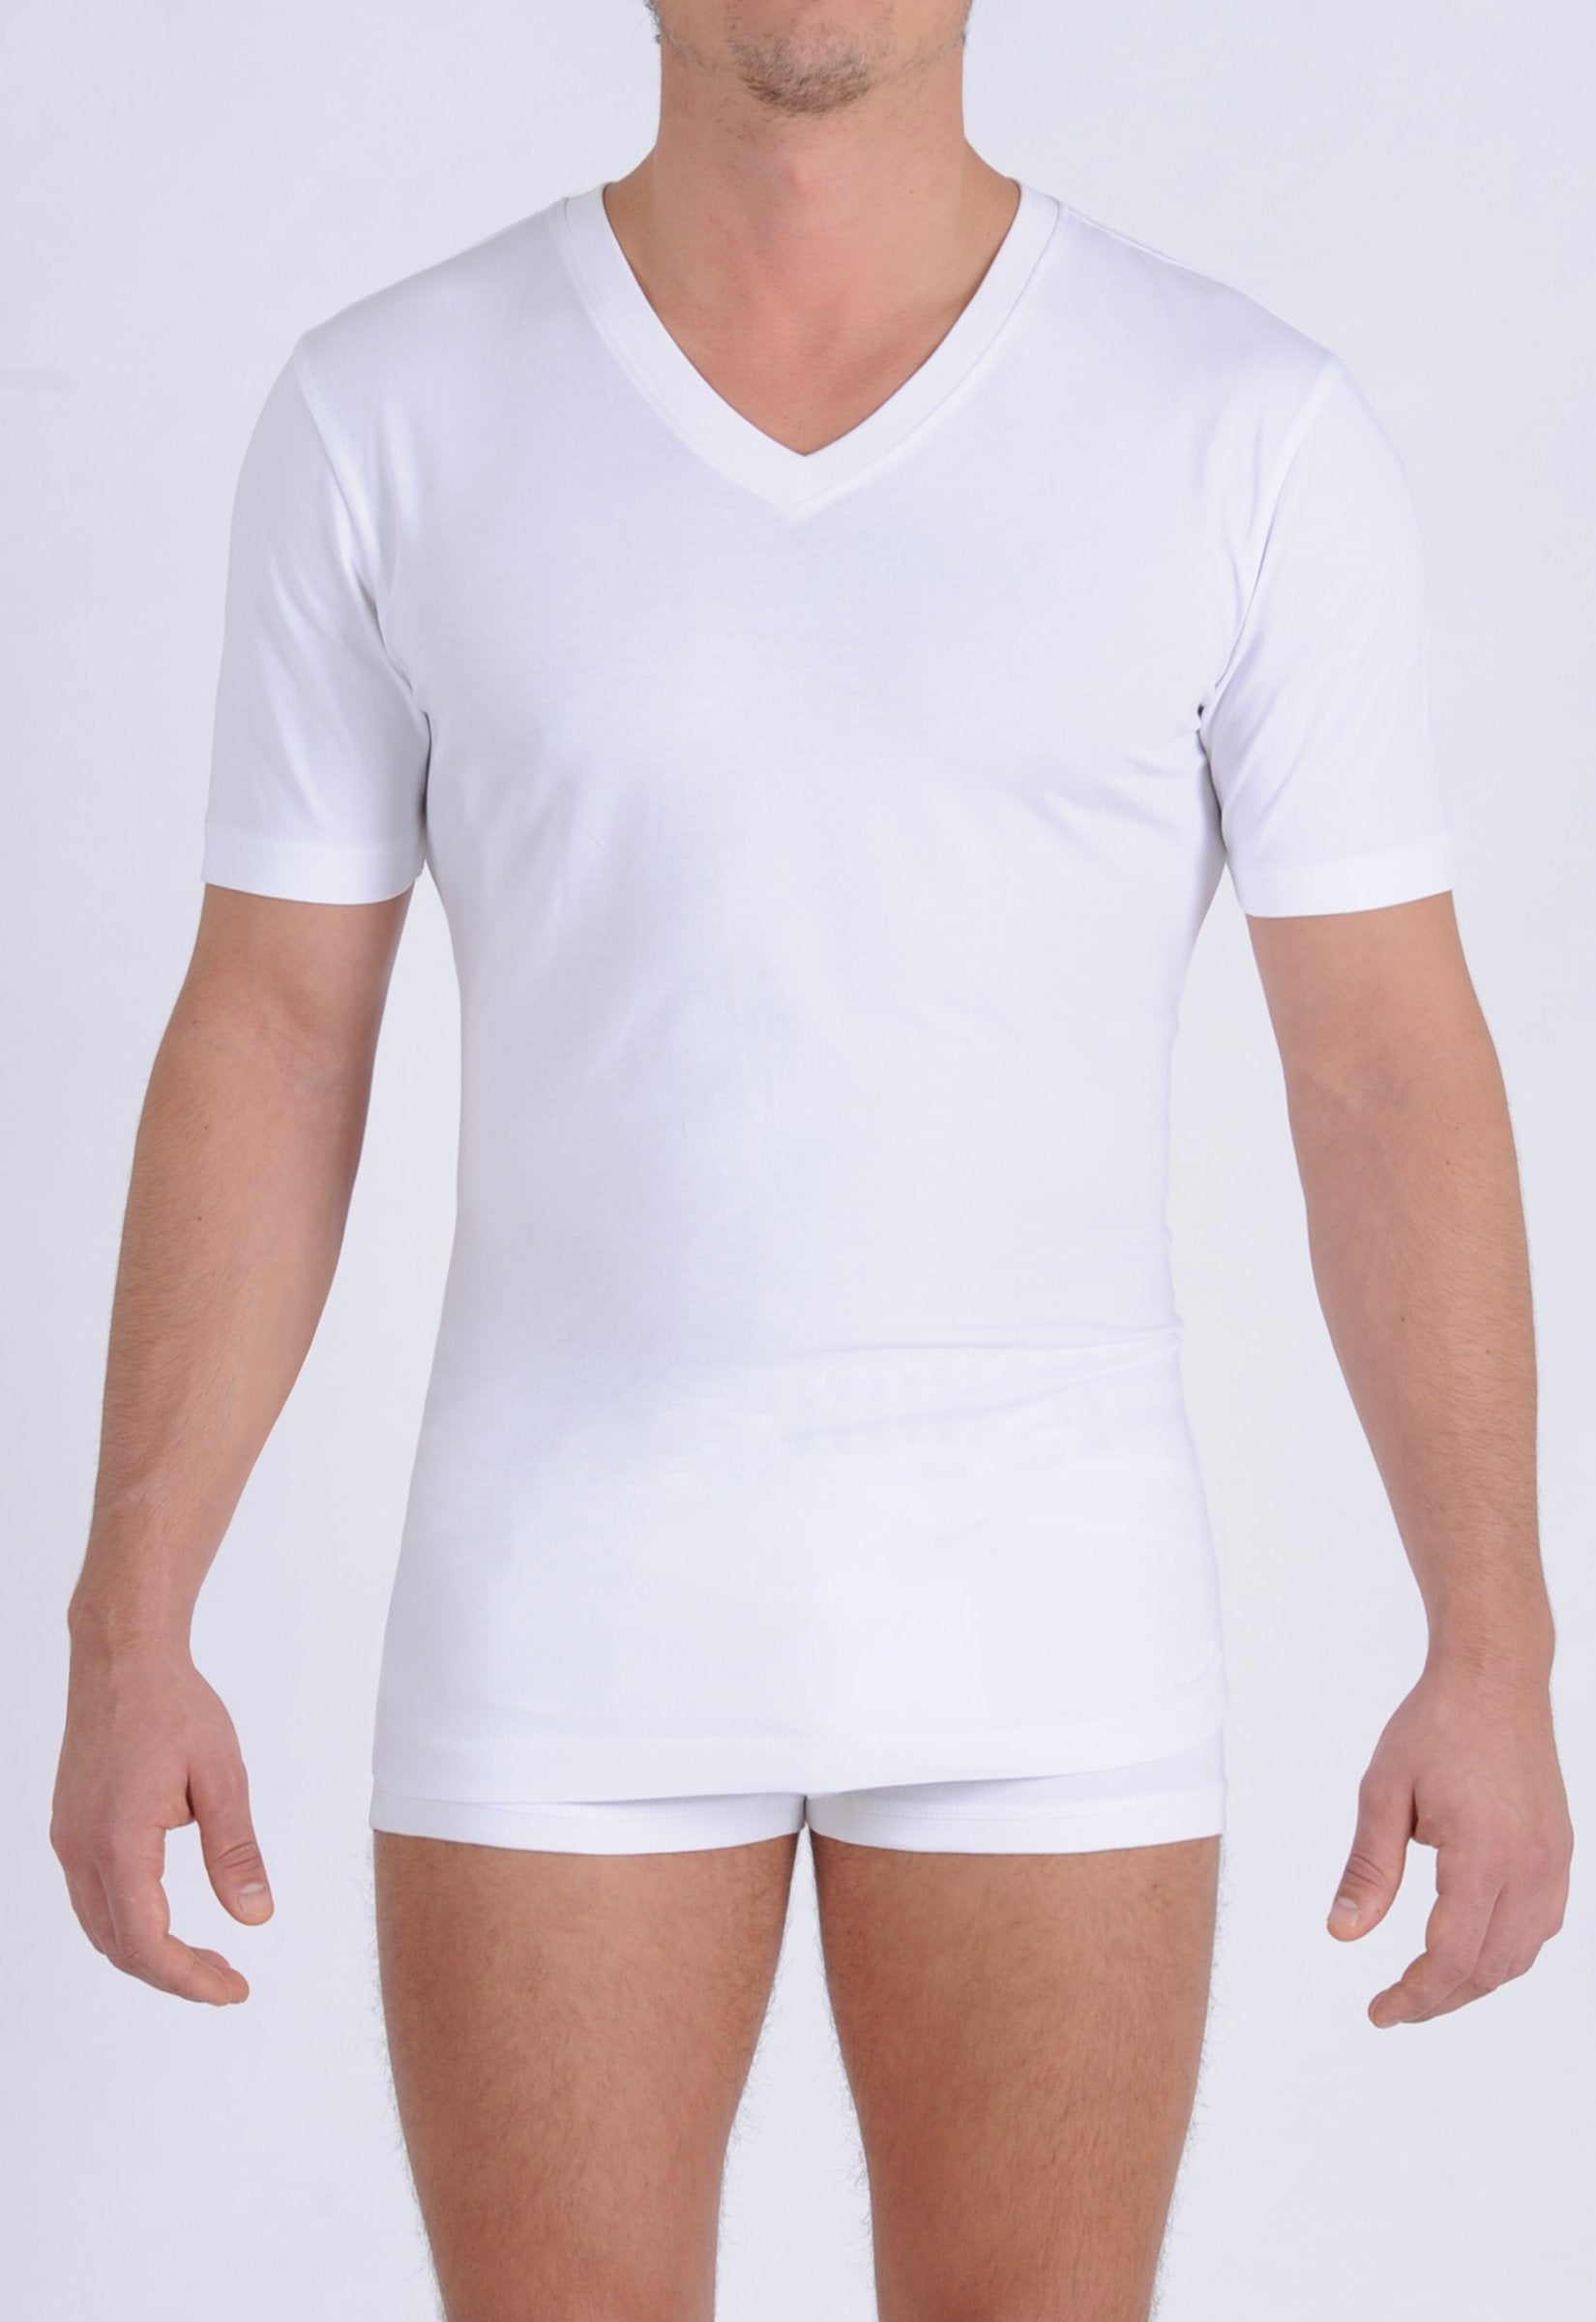 Ginch Gonch Men's Signature Series - V-Neck T-Shirt White front